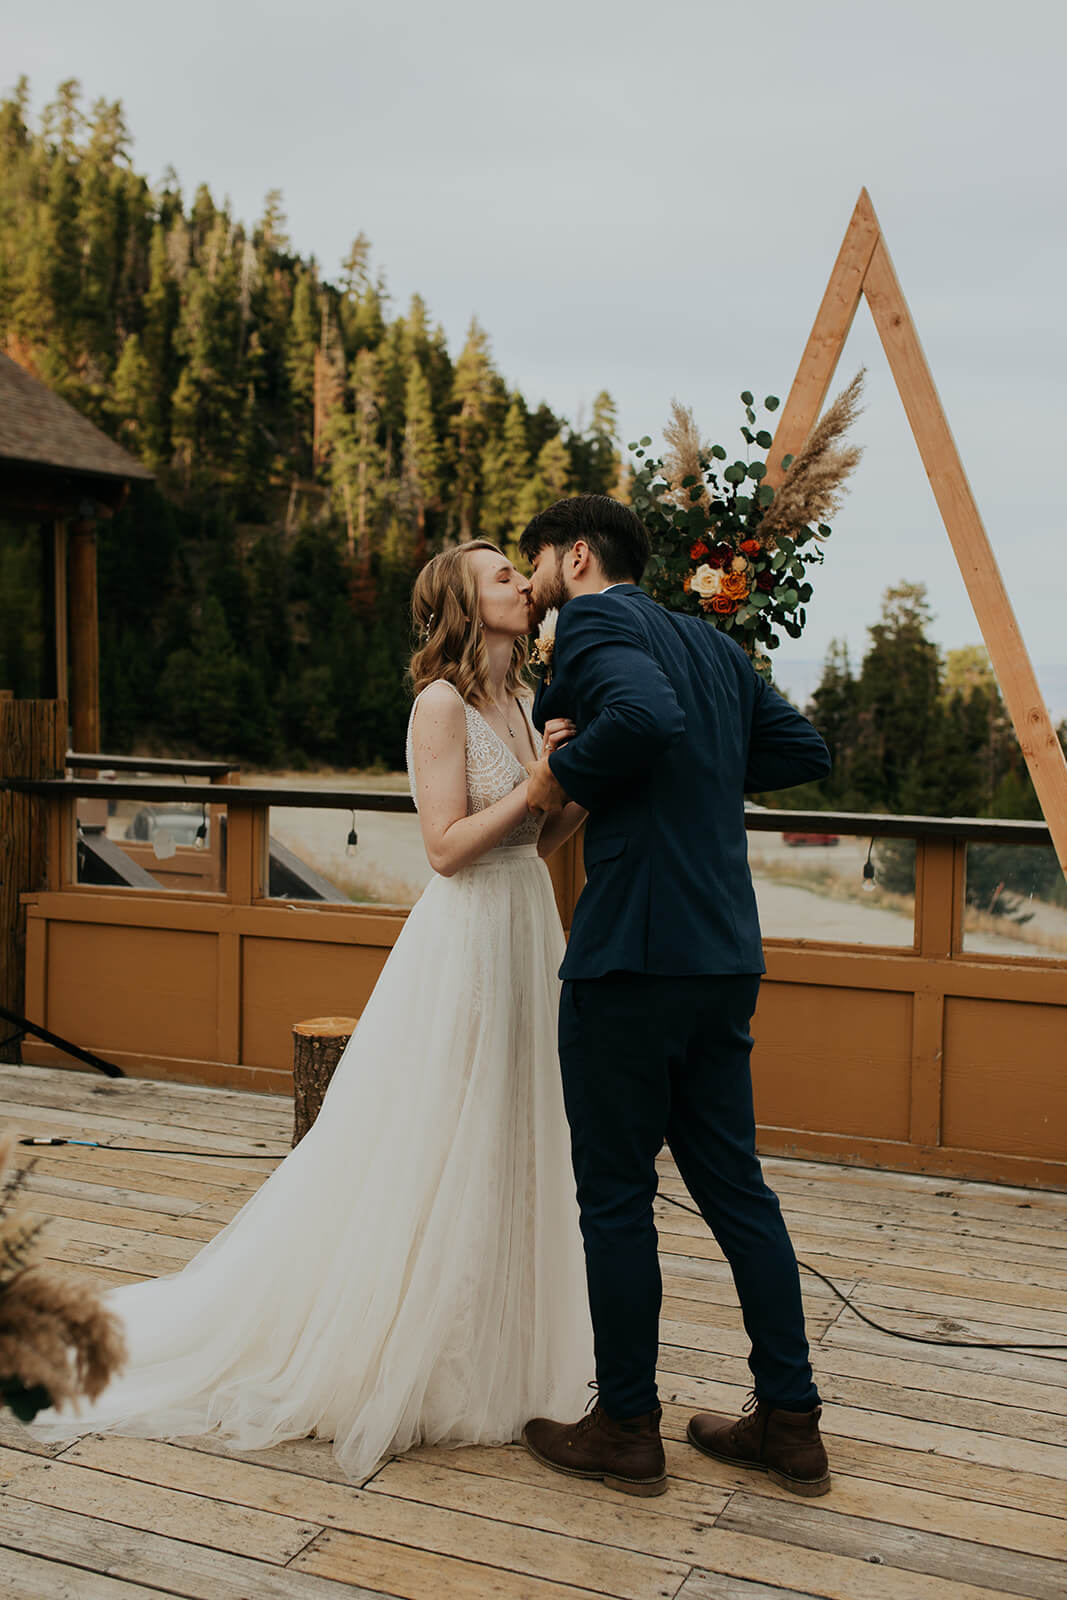 Bride and groom kiss at outdoor wedding ceremony at Mission Ridge Ski Resort